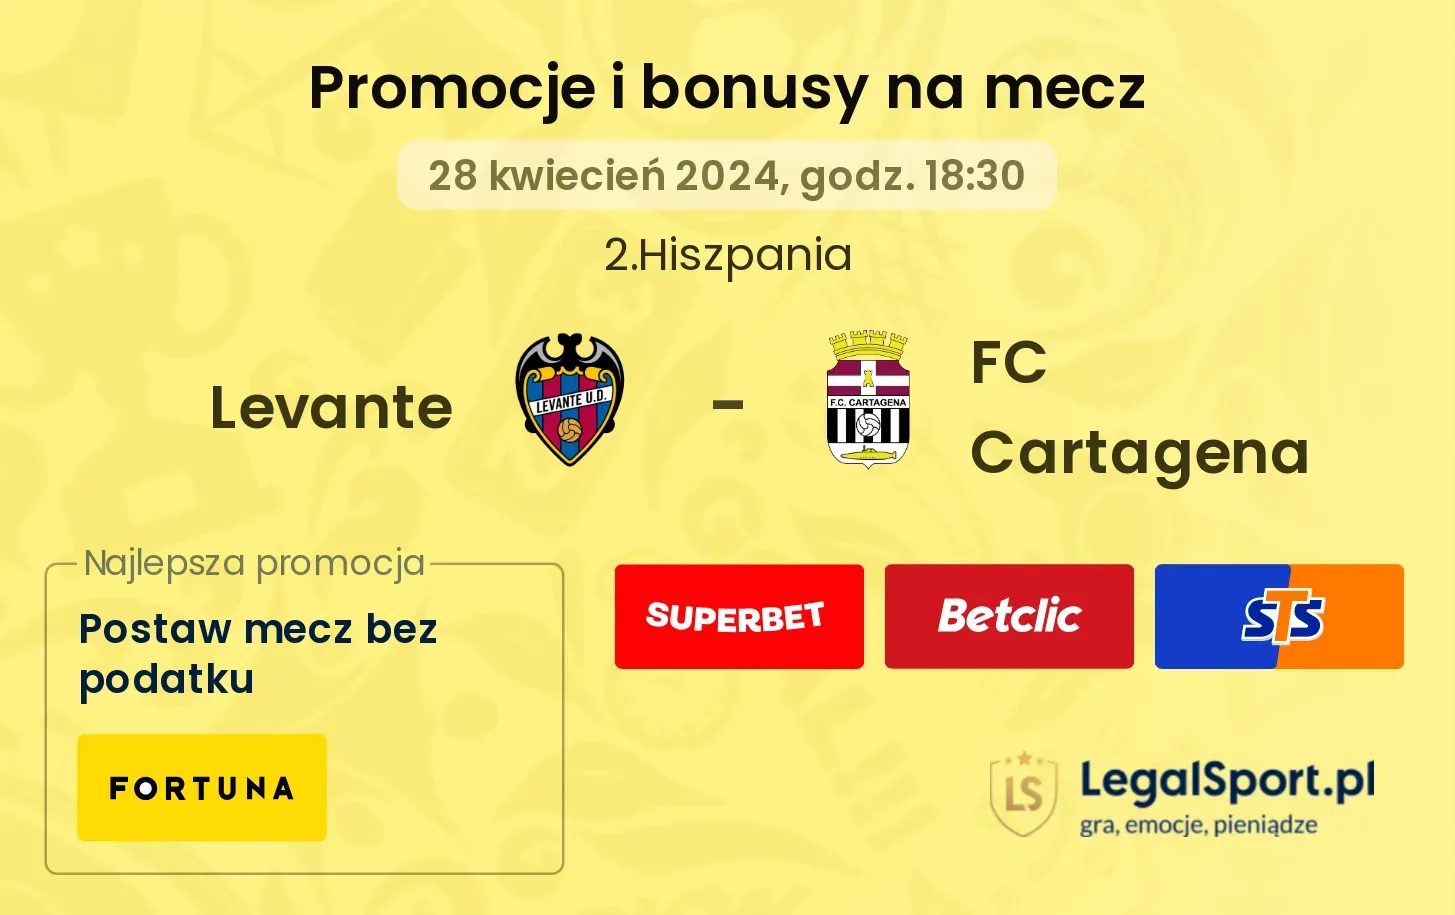 Levante - FC Cartagena promocje bonusy na mecz